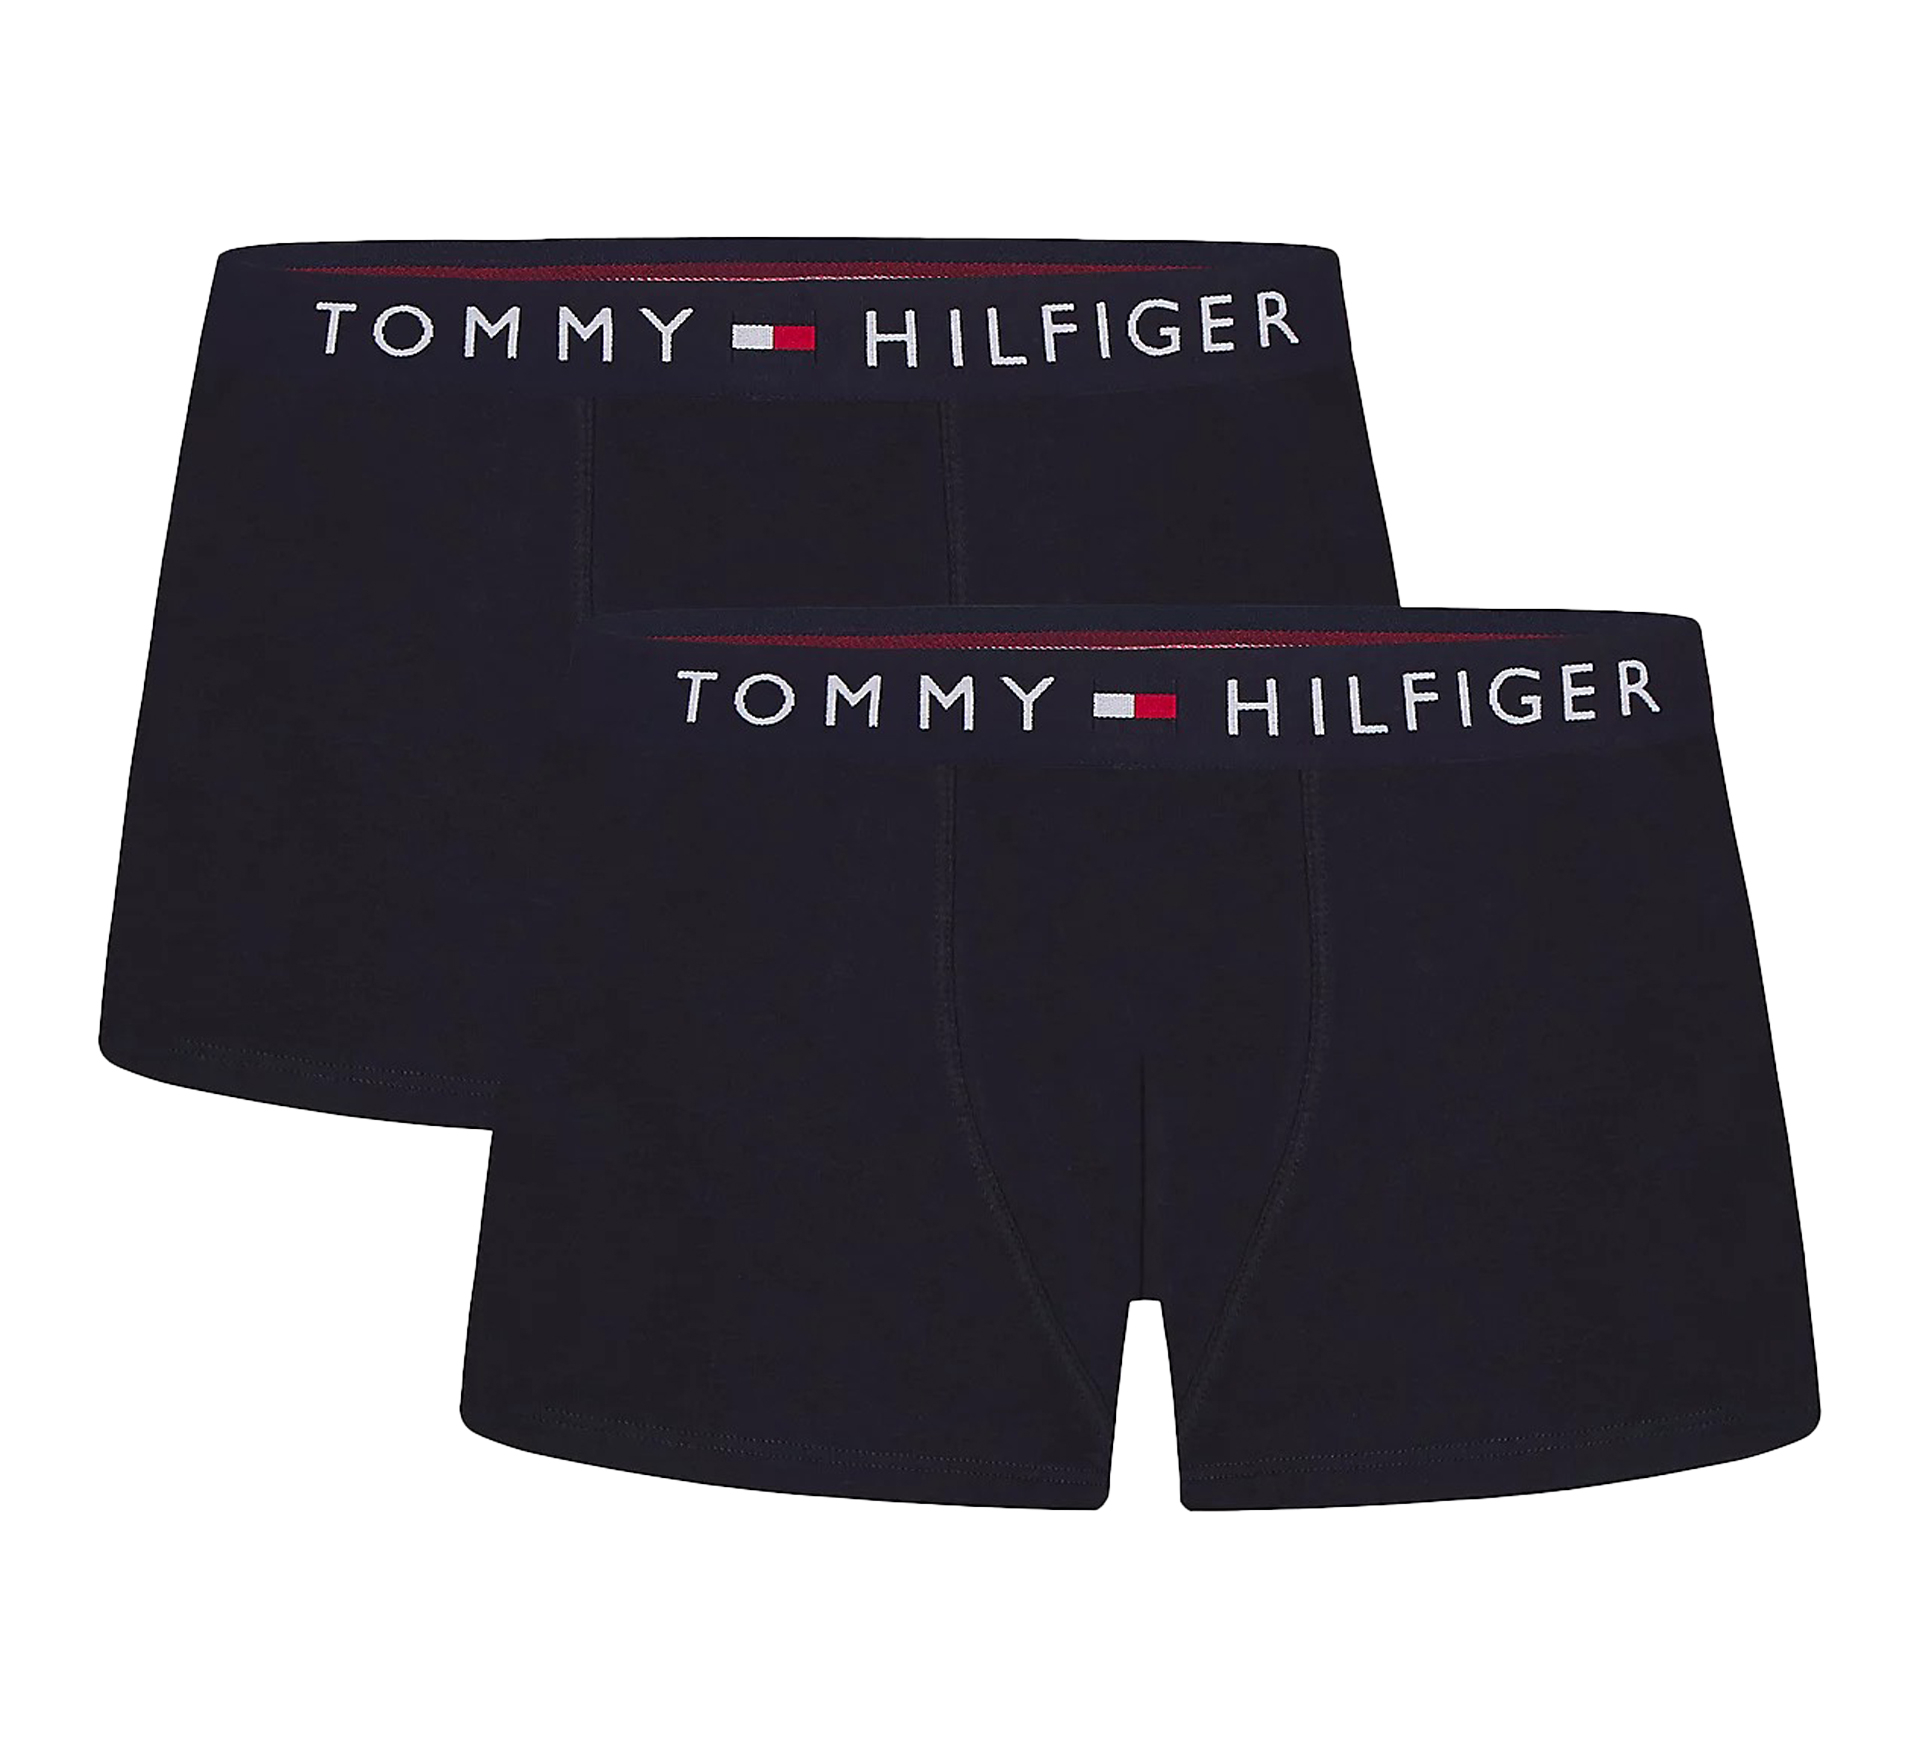 Boxer-shorts Tommy Hilfiger